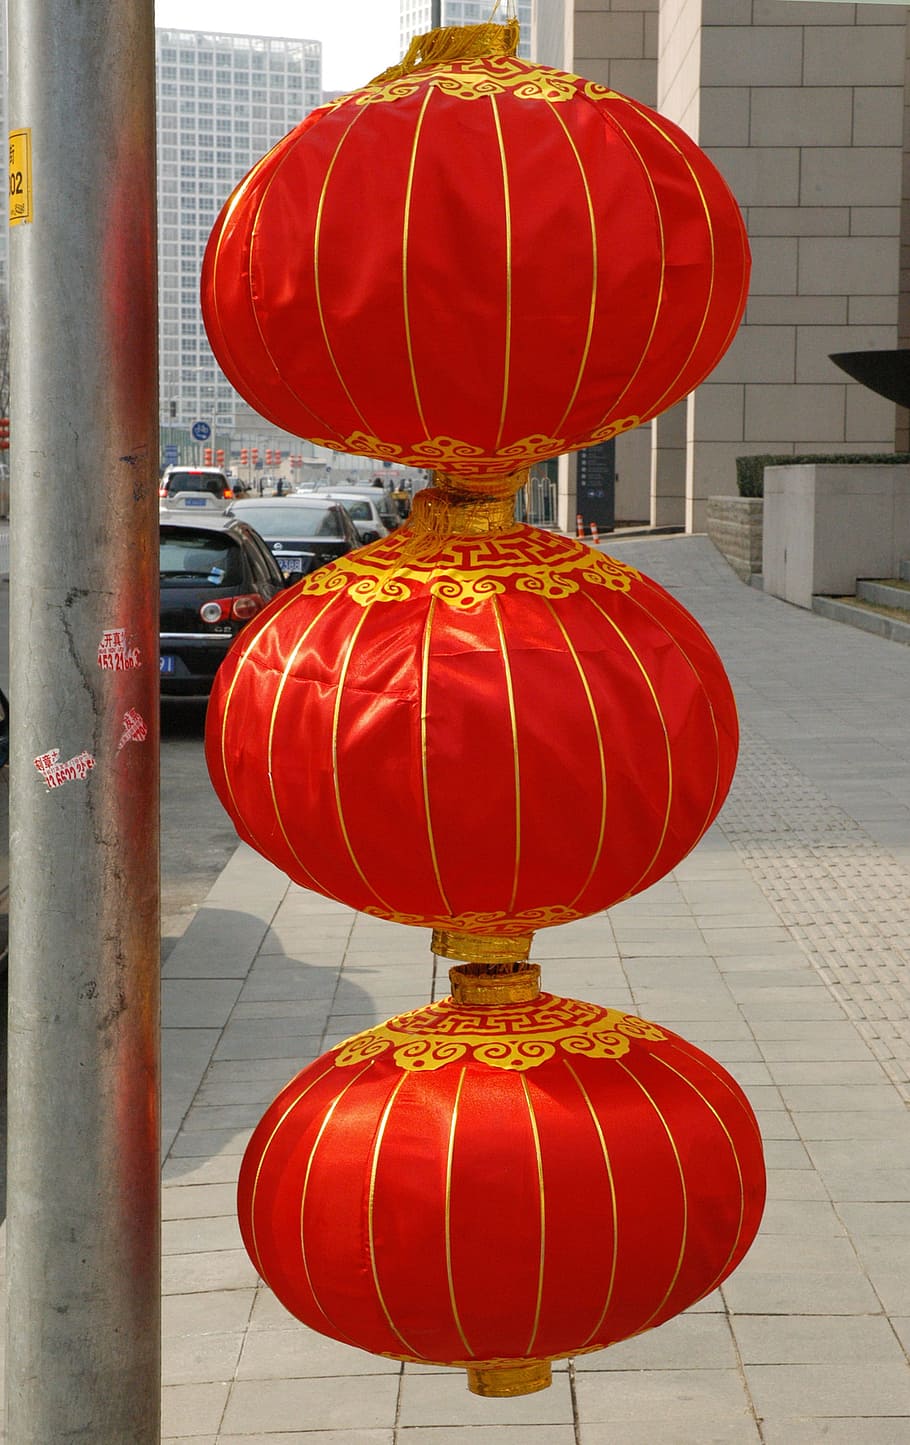 Cina, Lentera, Budaya, festival, tradisional, Asia, oriental, dekorasi, perayaan, lampu